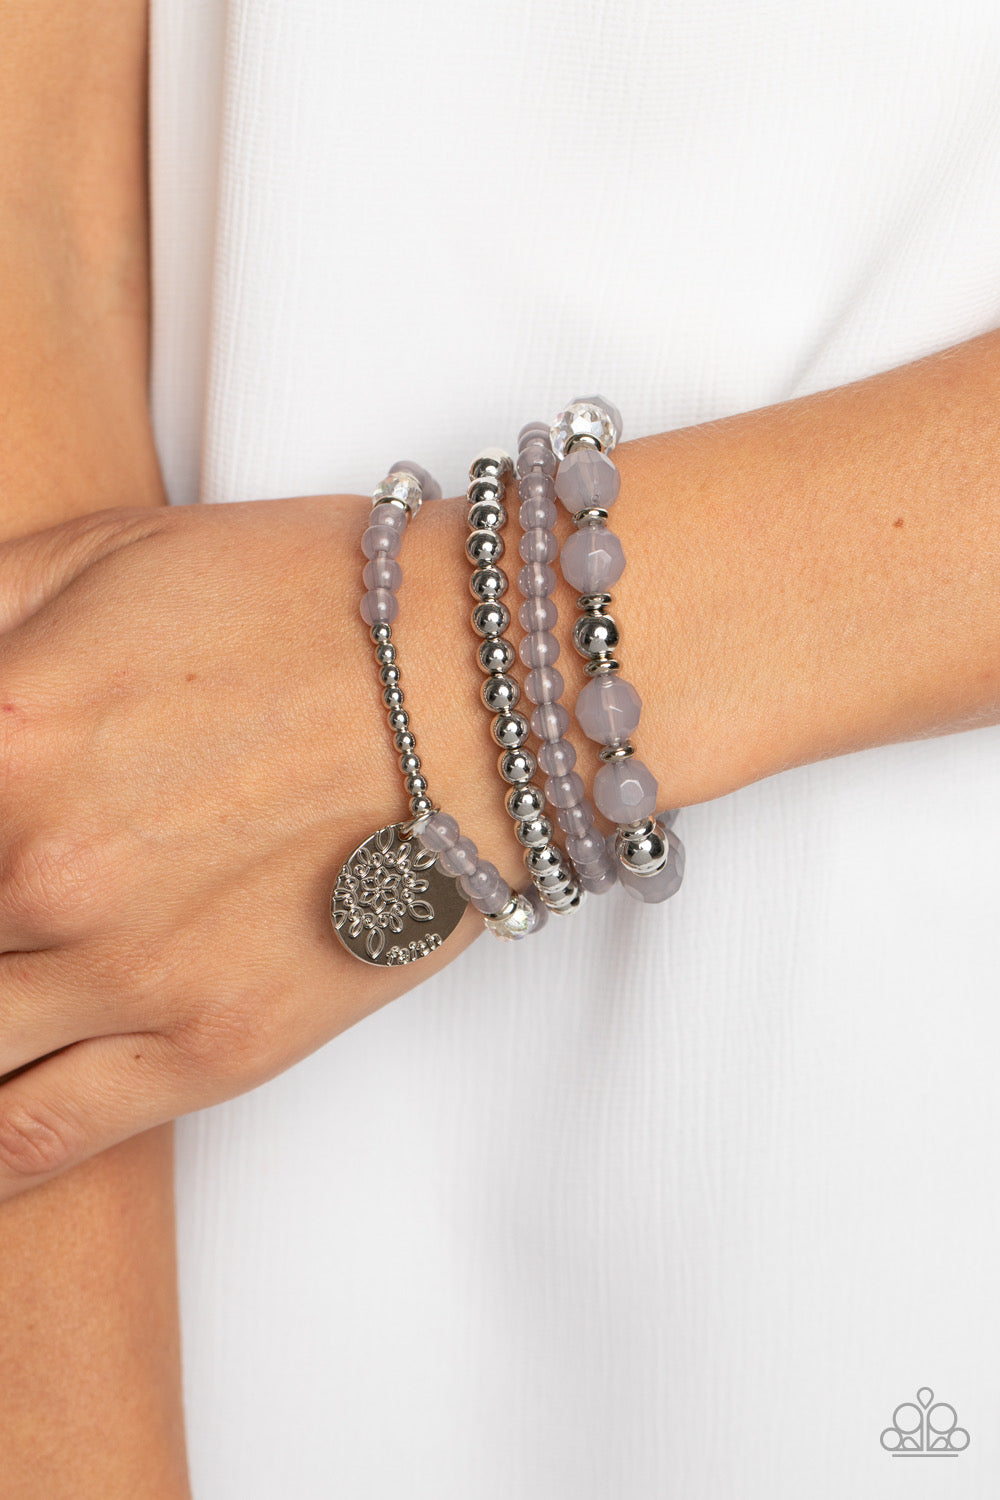 Surfer Style - Silver Bracelet - Charm Bracelets for Women Paparazzi jewelry images